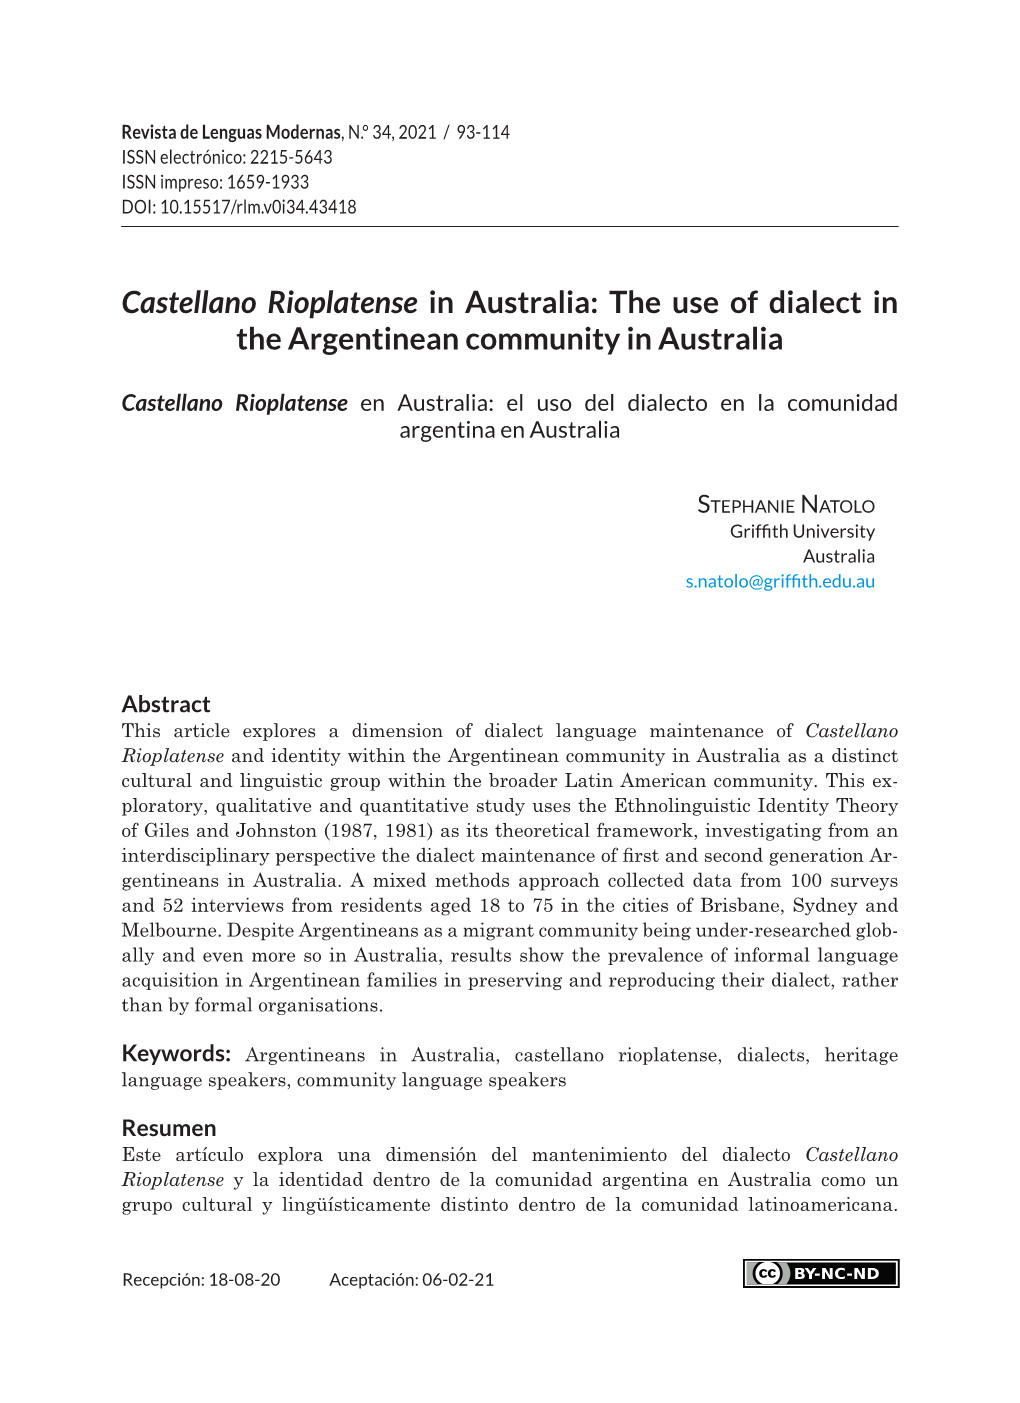 Castellano Rioplatense in Australia: the Use of Dialect in the Argentinean Community in Australia